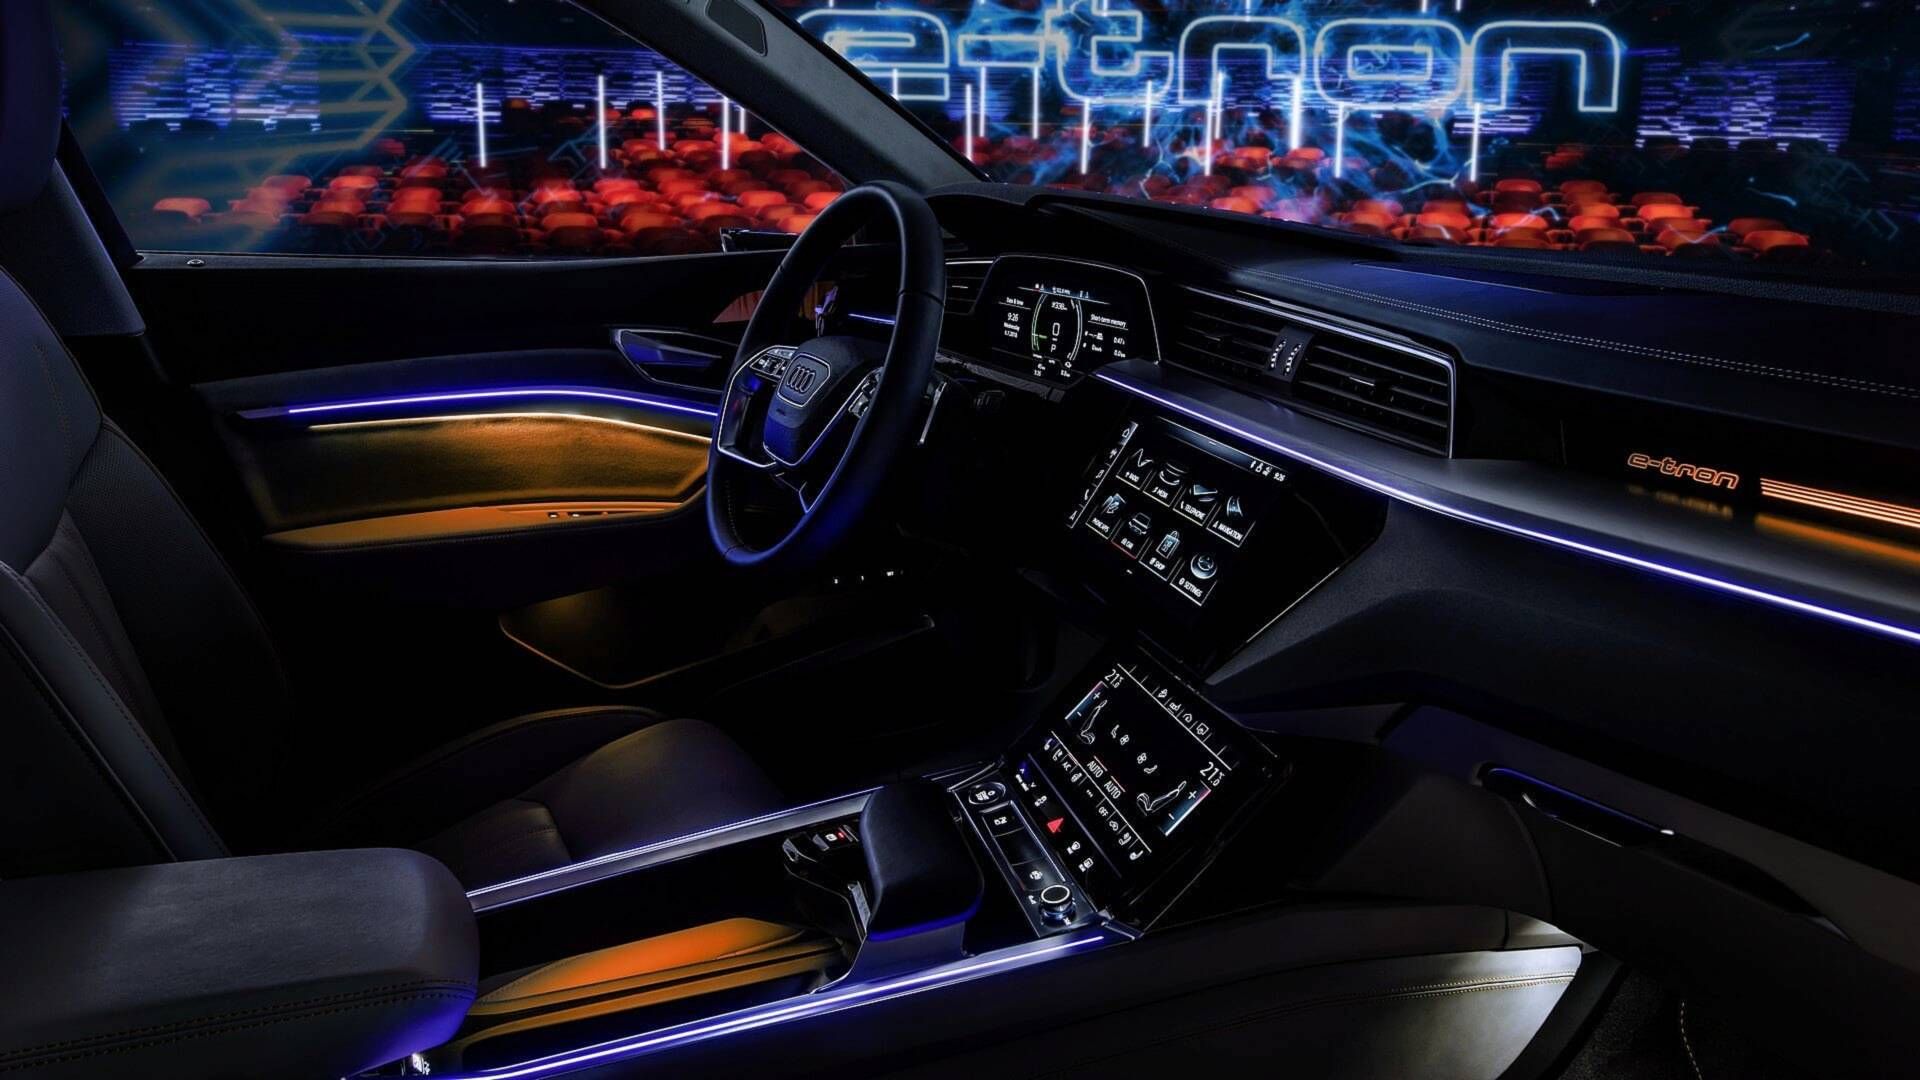 2020 Audi E-Tron cockpit at night